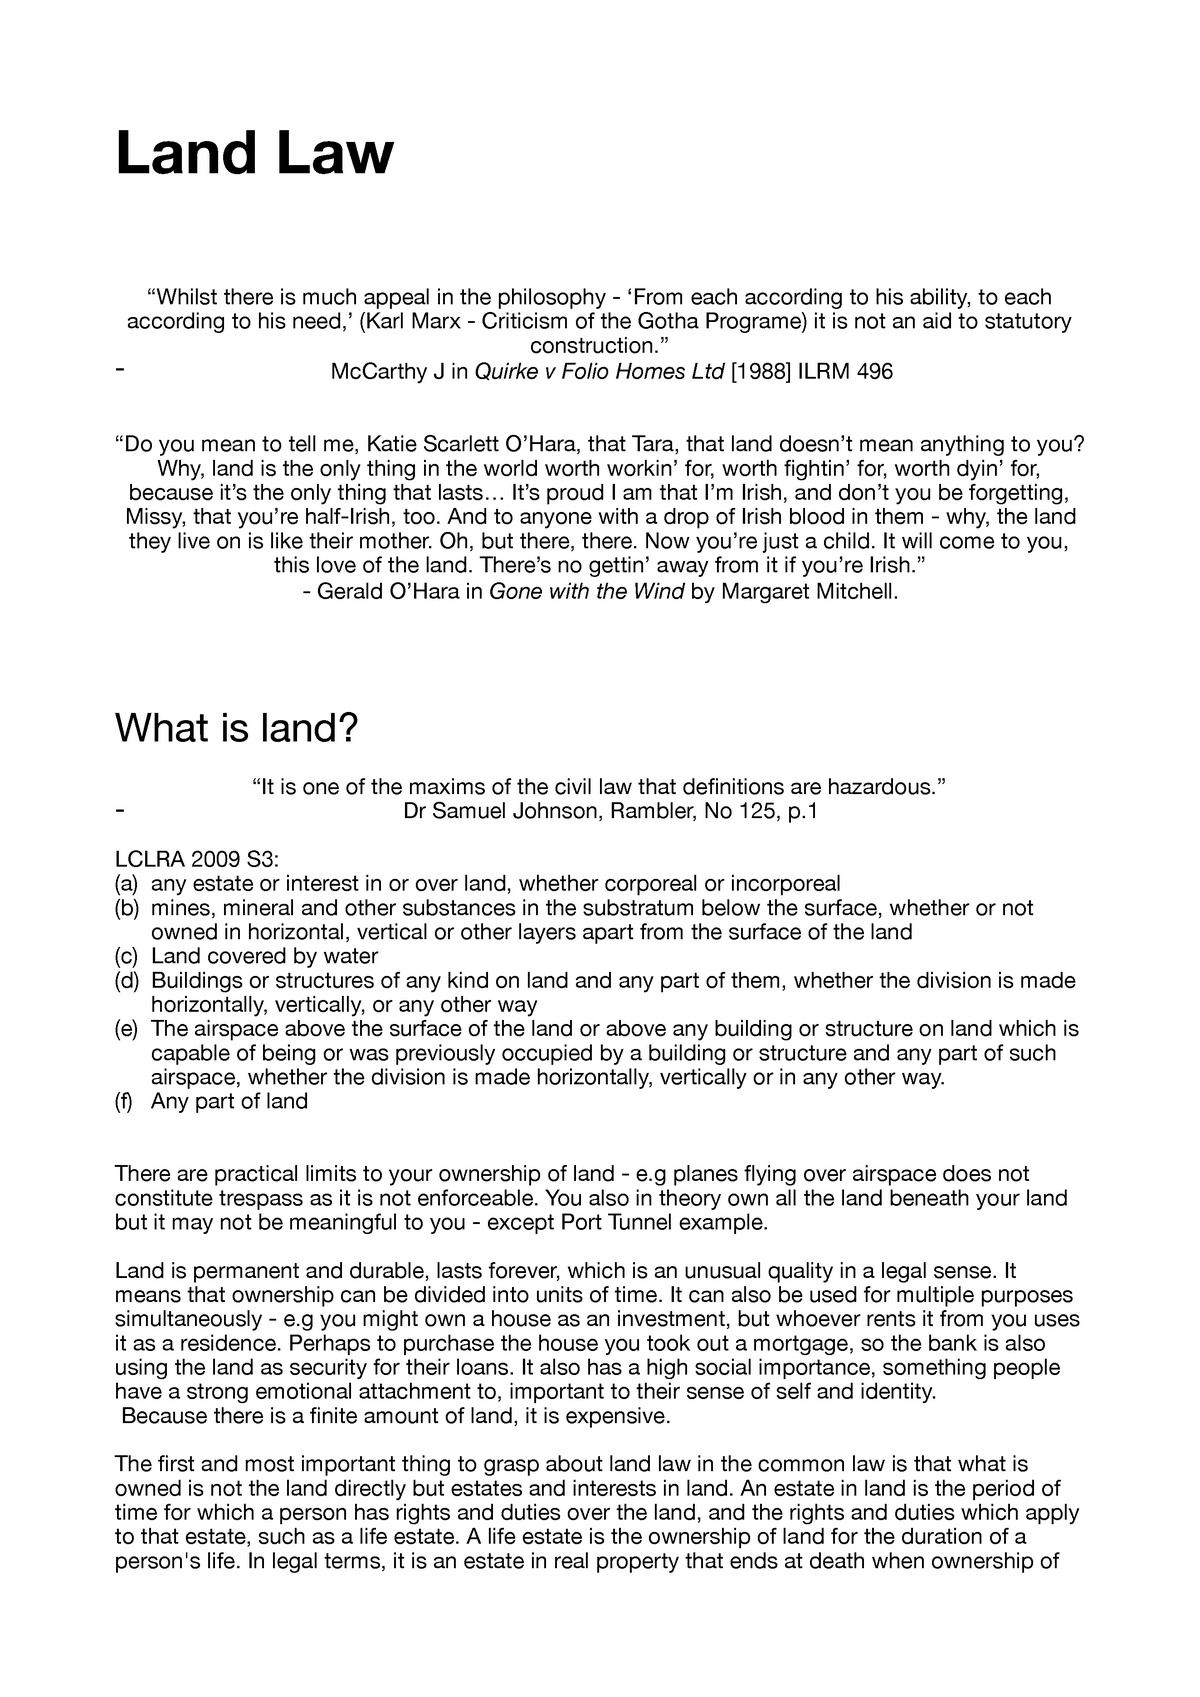 land law dissertation